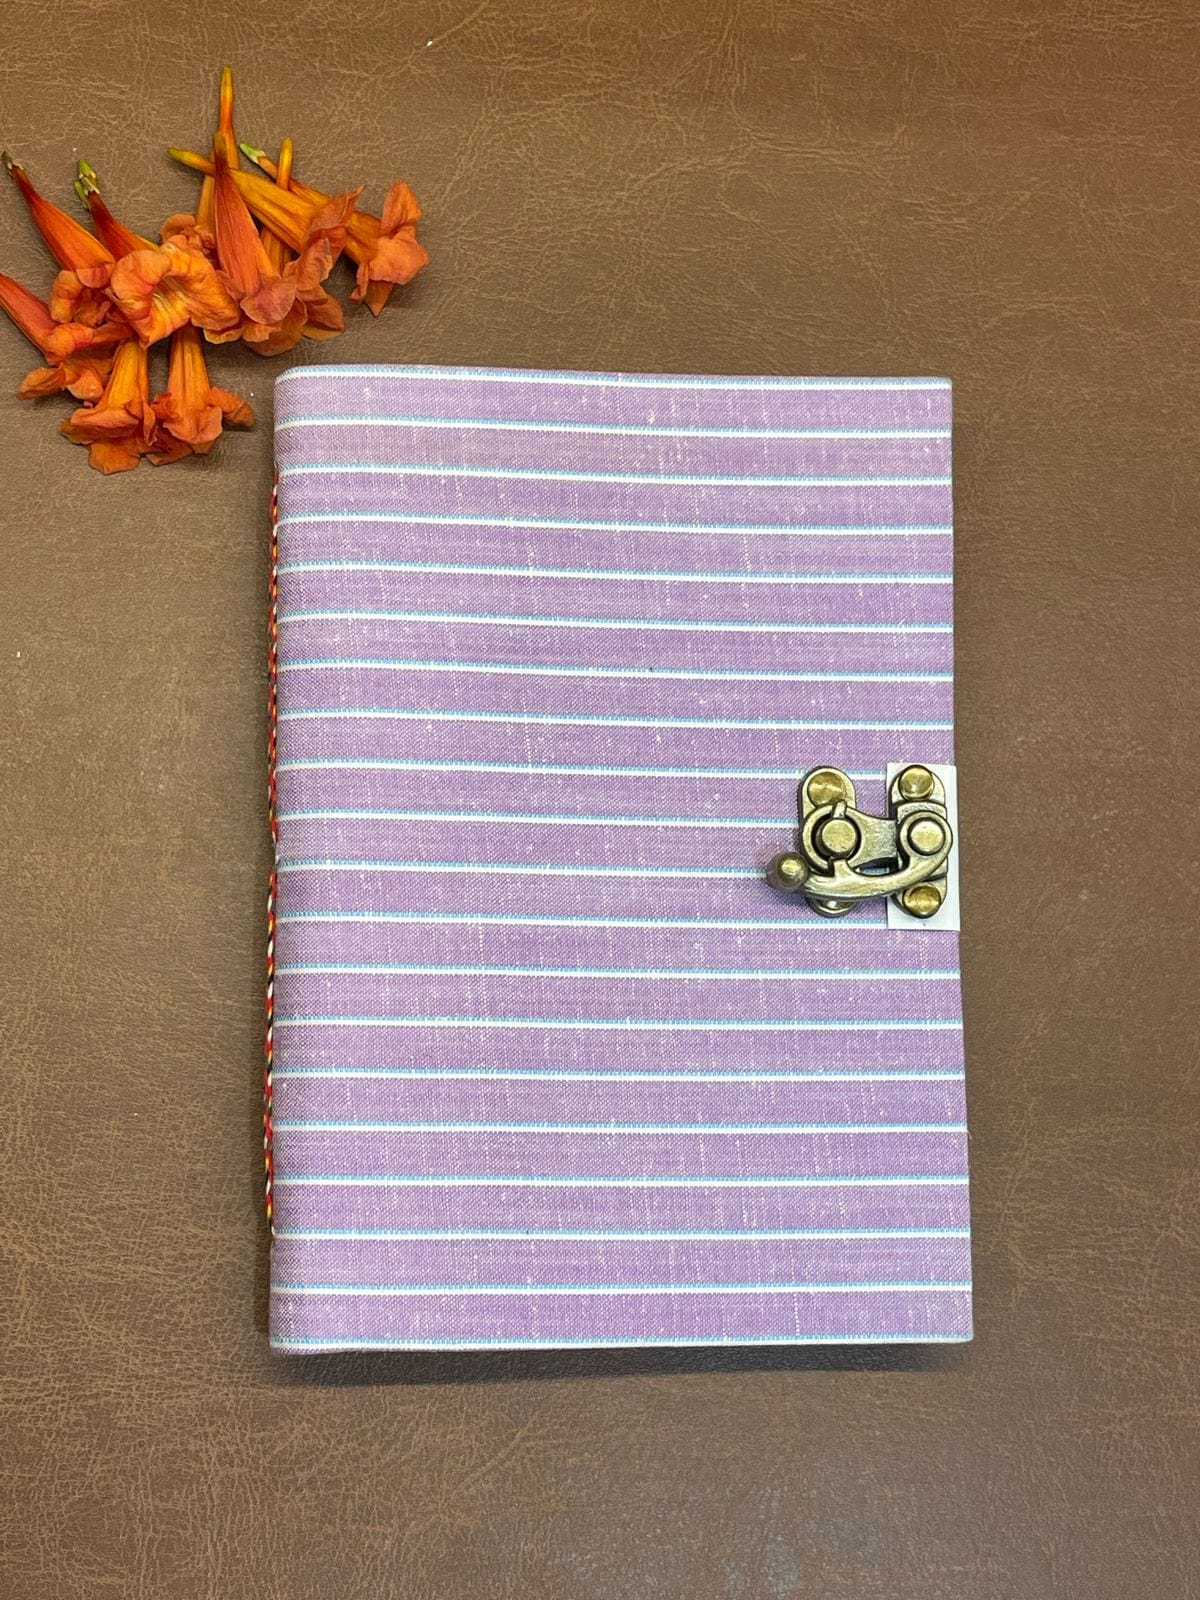 Assorted Handmade Diaries with Vintage Lock